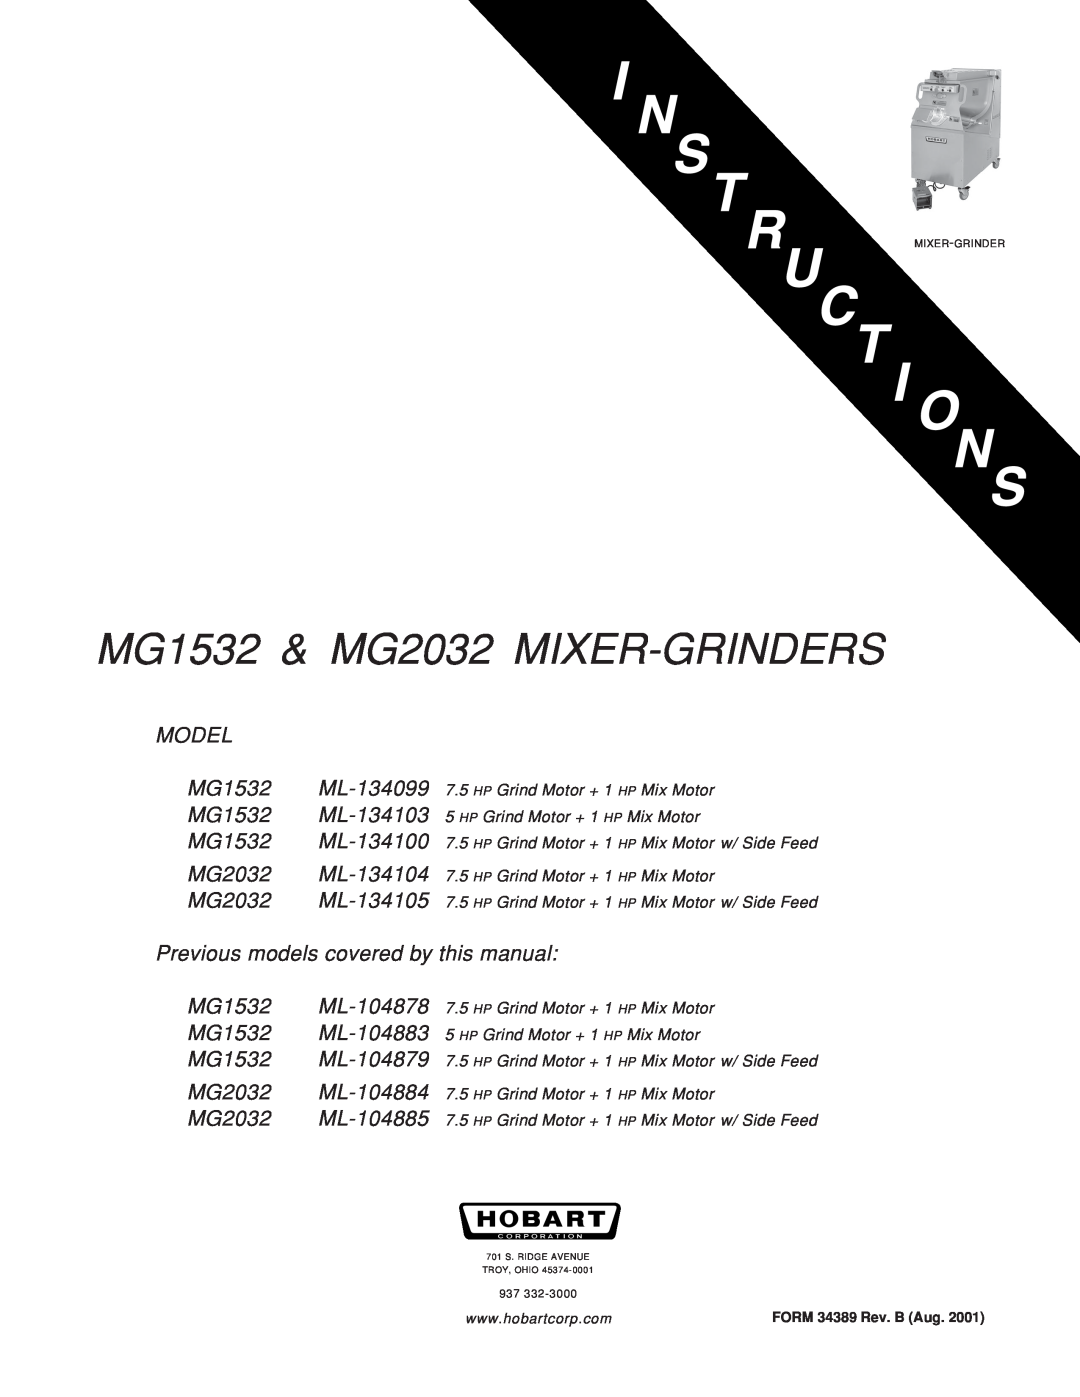 Hobart manual MG1532 & MG2032 MIXER-GRINDERS, MODEL MG1532 ML-134099 MG1532 ML-134103 MG1532 ML-134100 